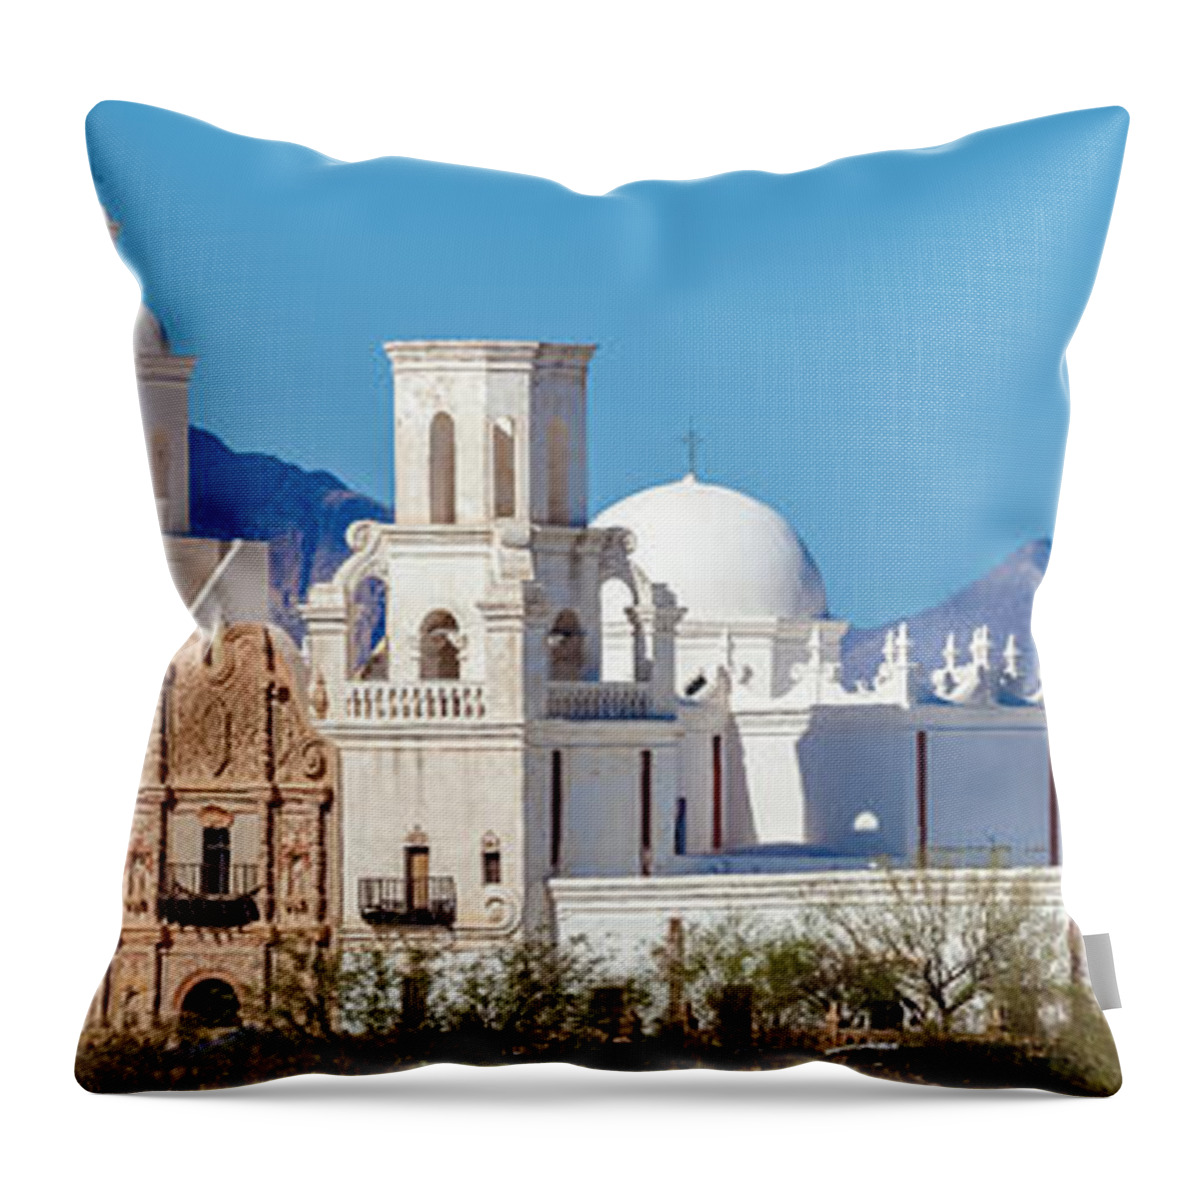 San Xavier Throw Pillow featuring the photograph San Xavier del Bac Mission by Ed Gleichman